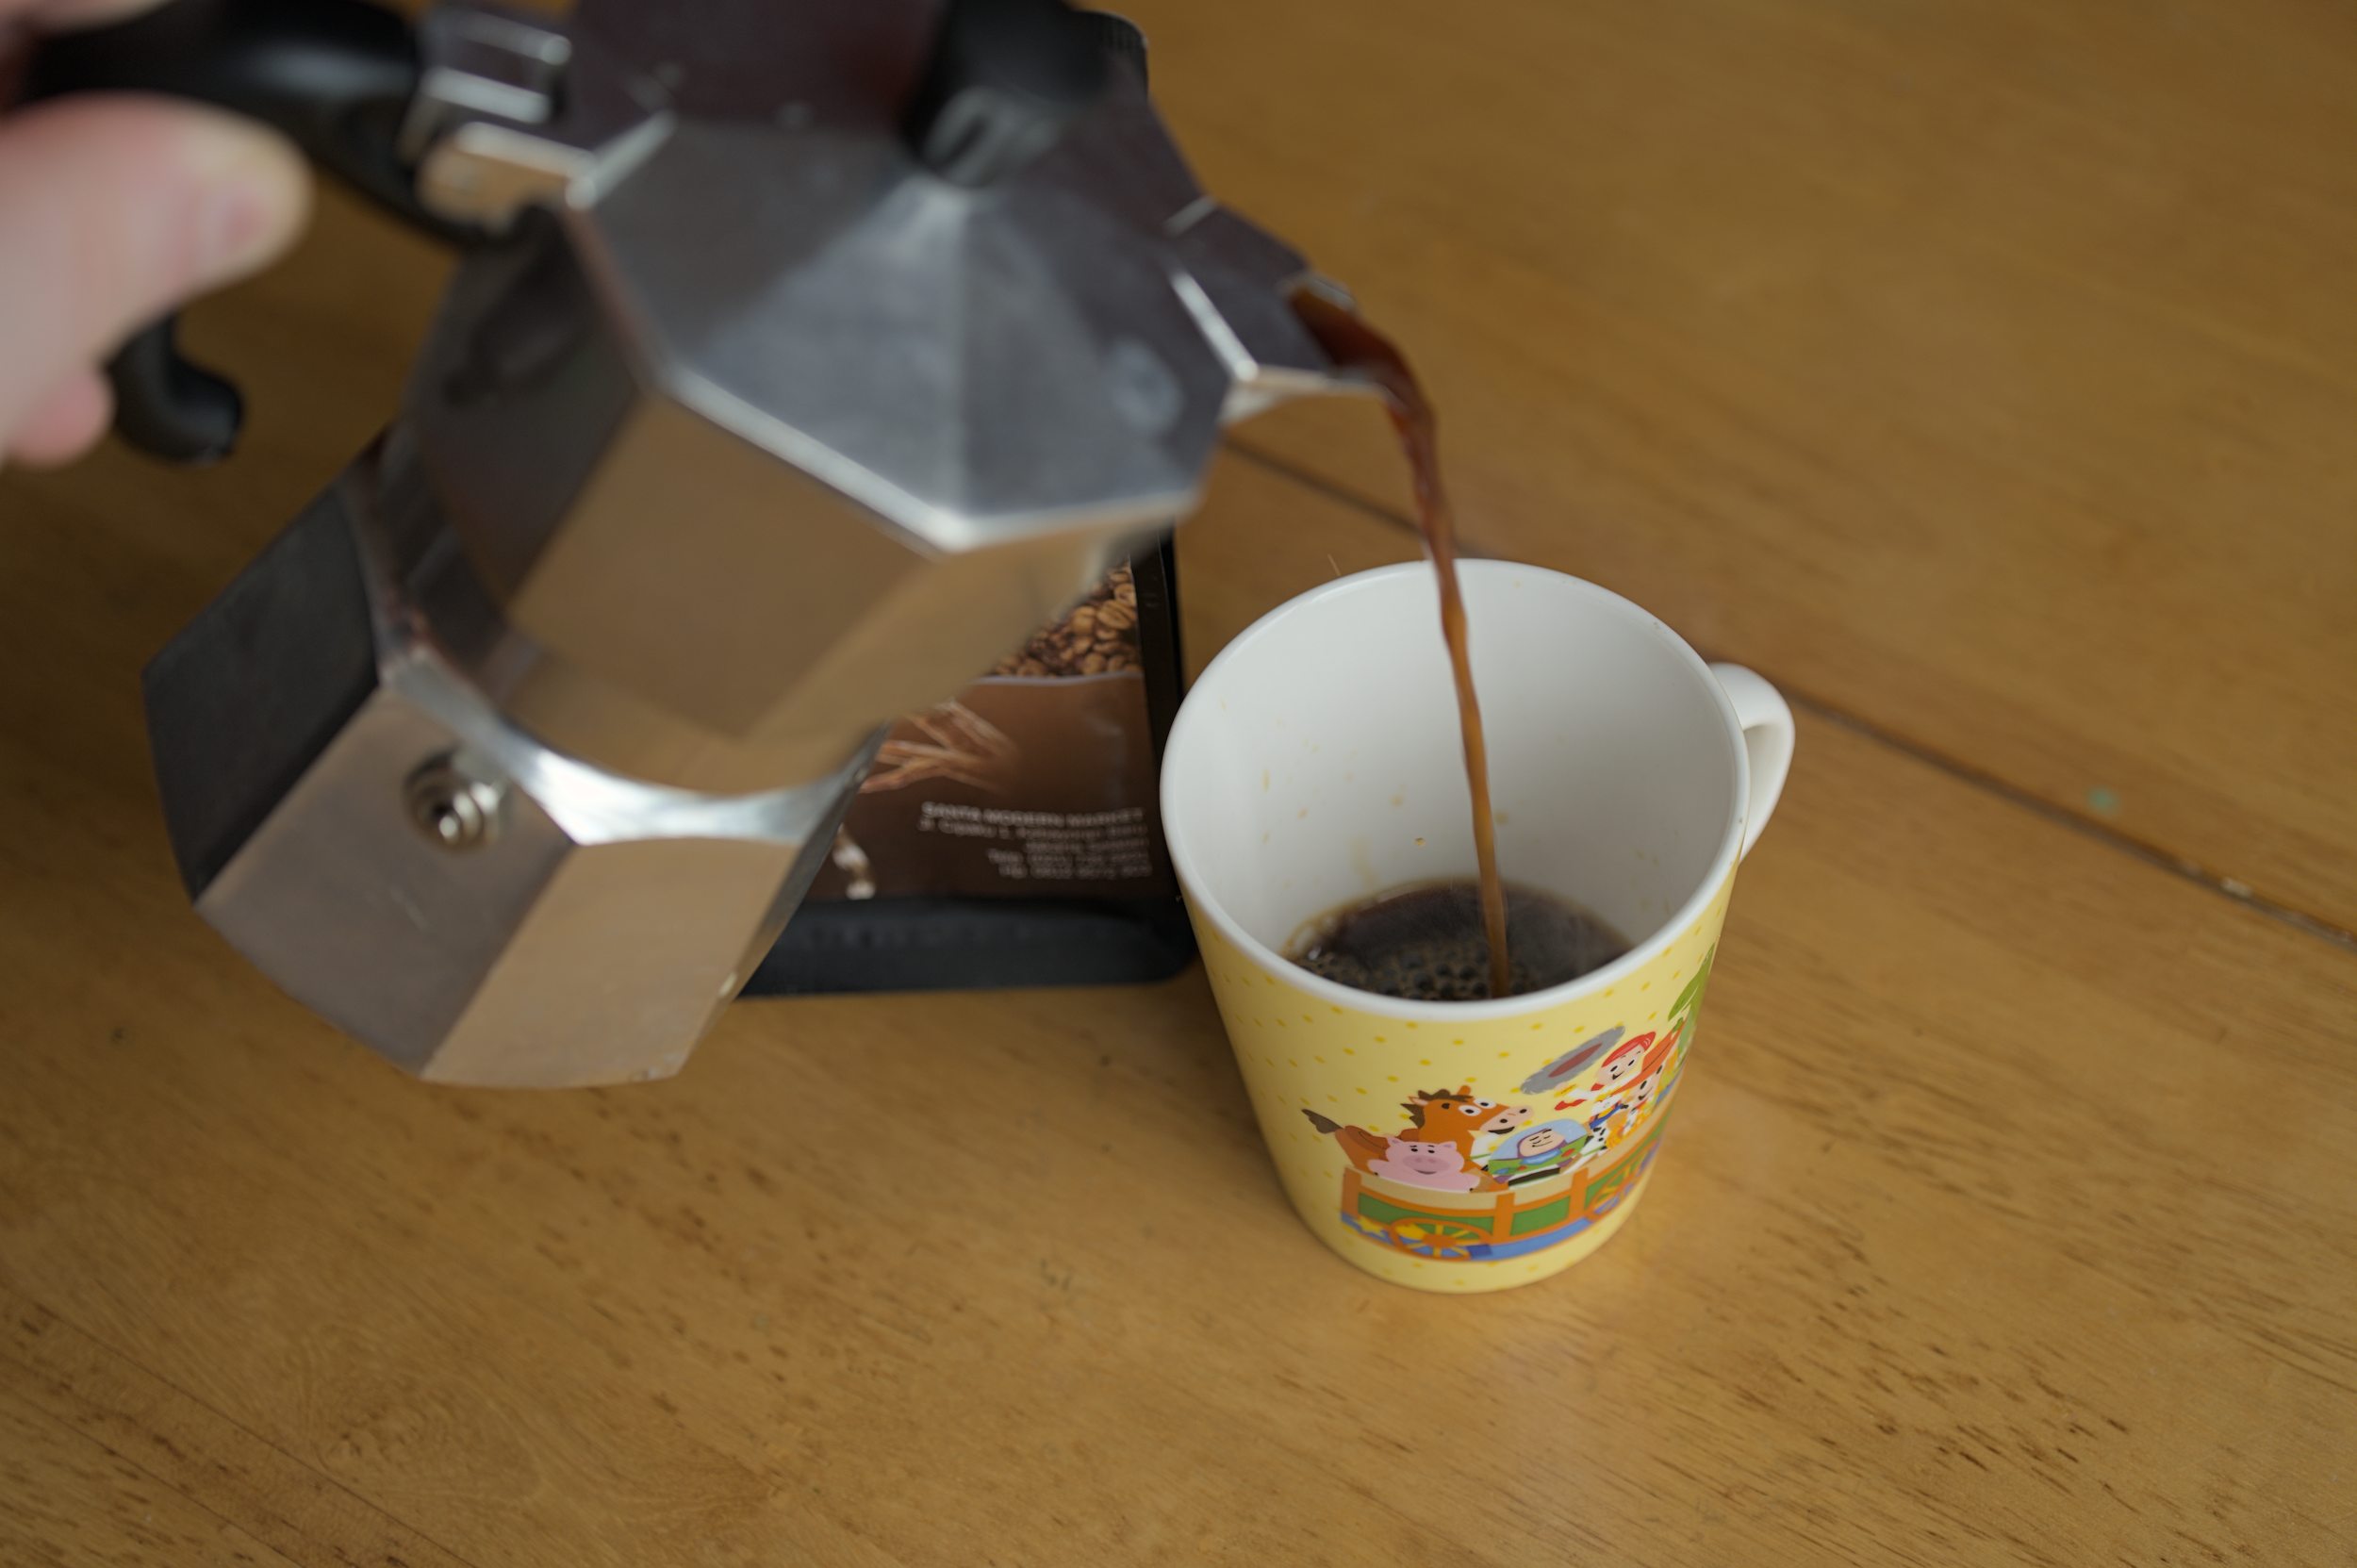 Pouring coffee into the mug